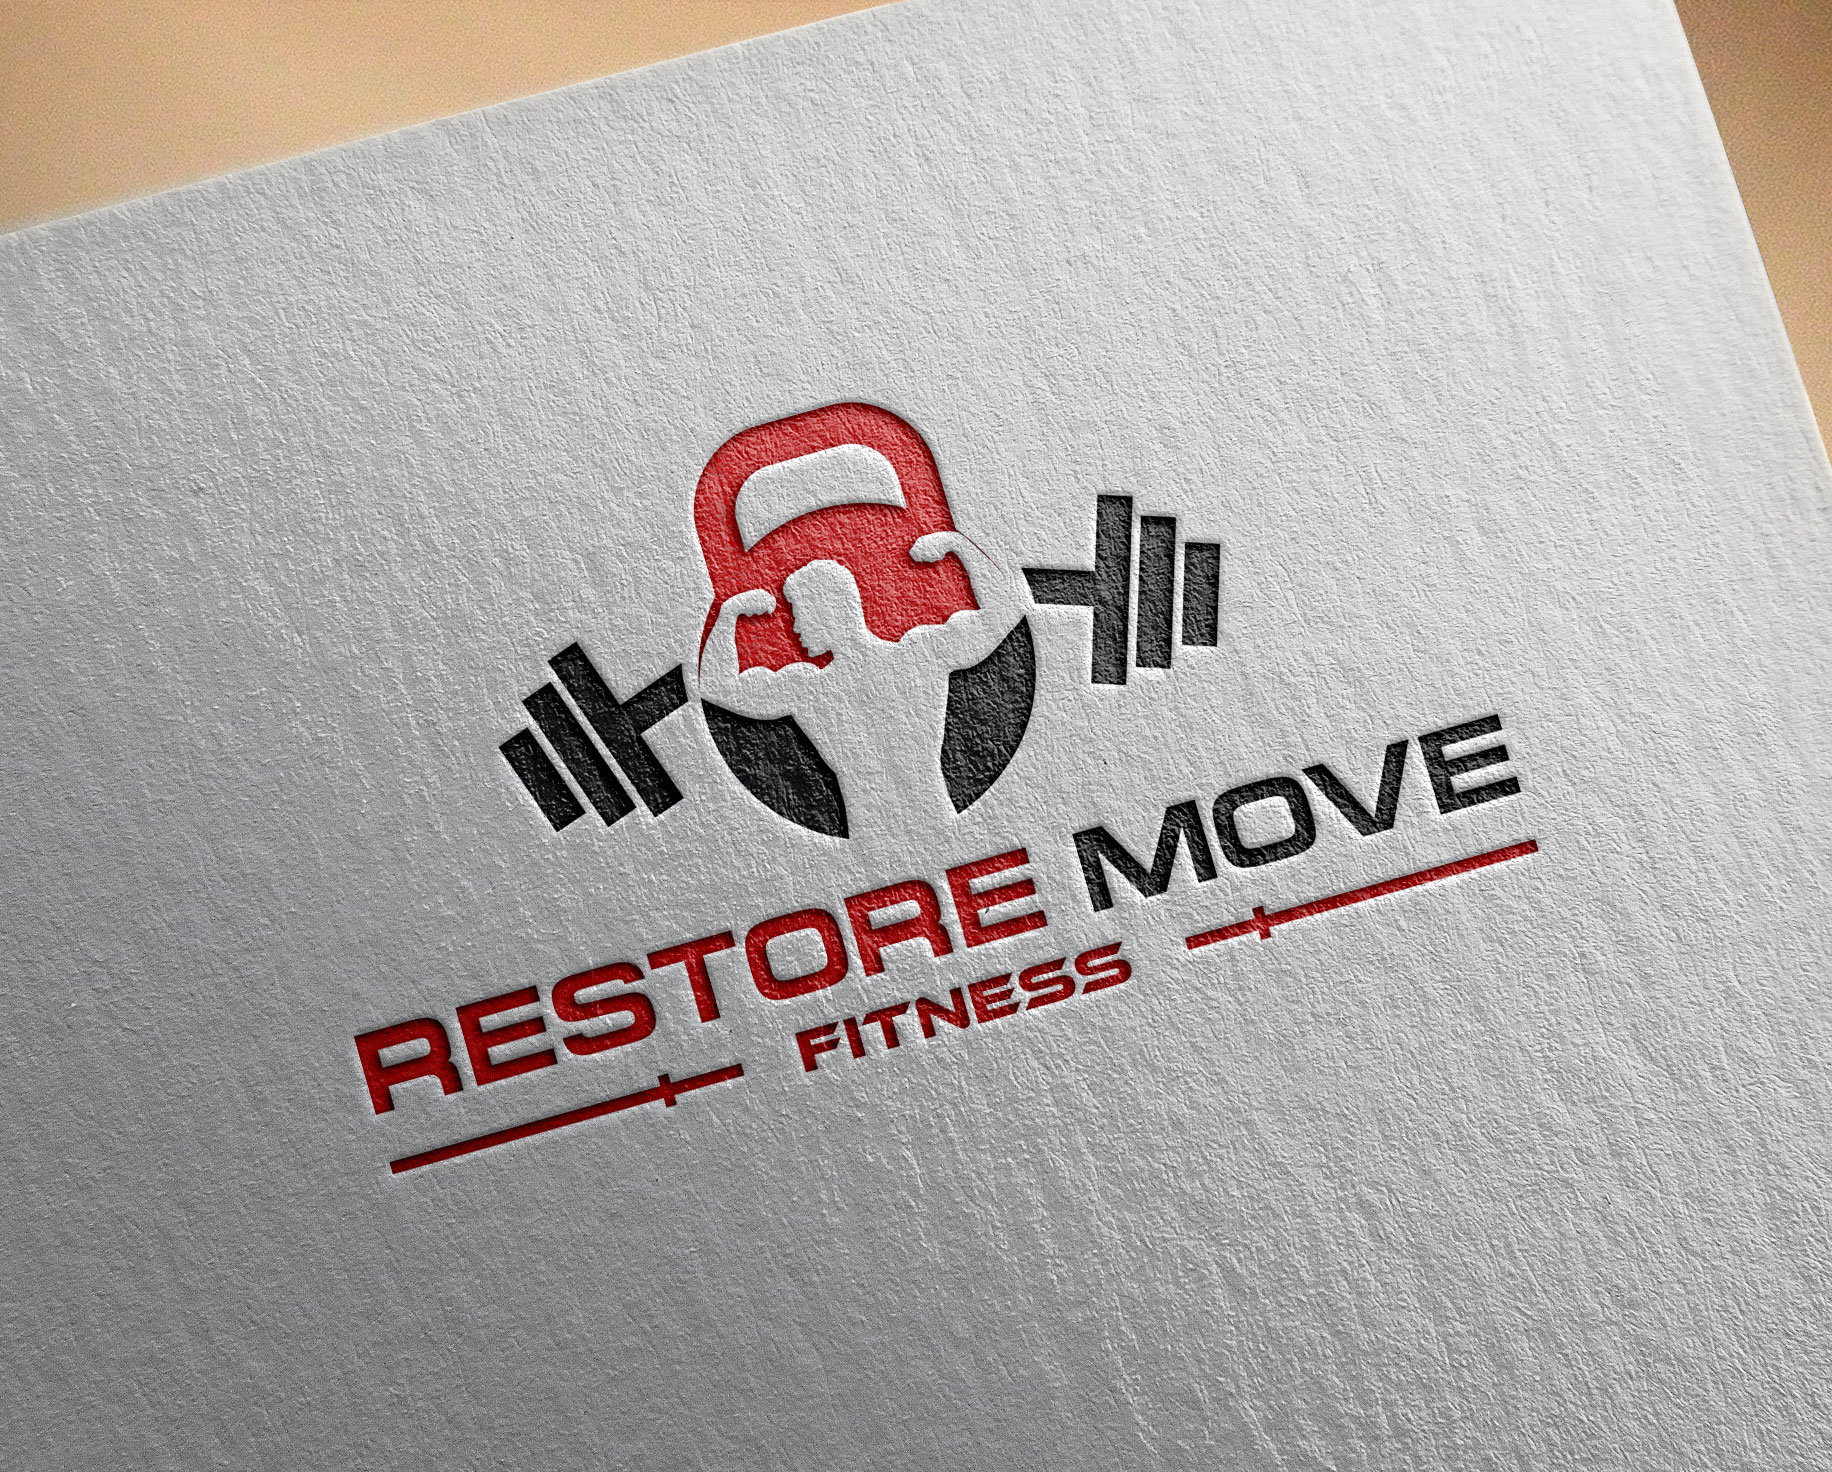 new style custom logo fitness plastic